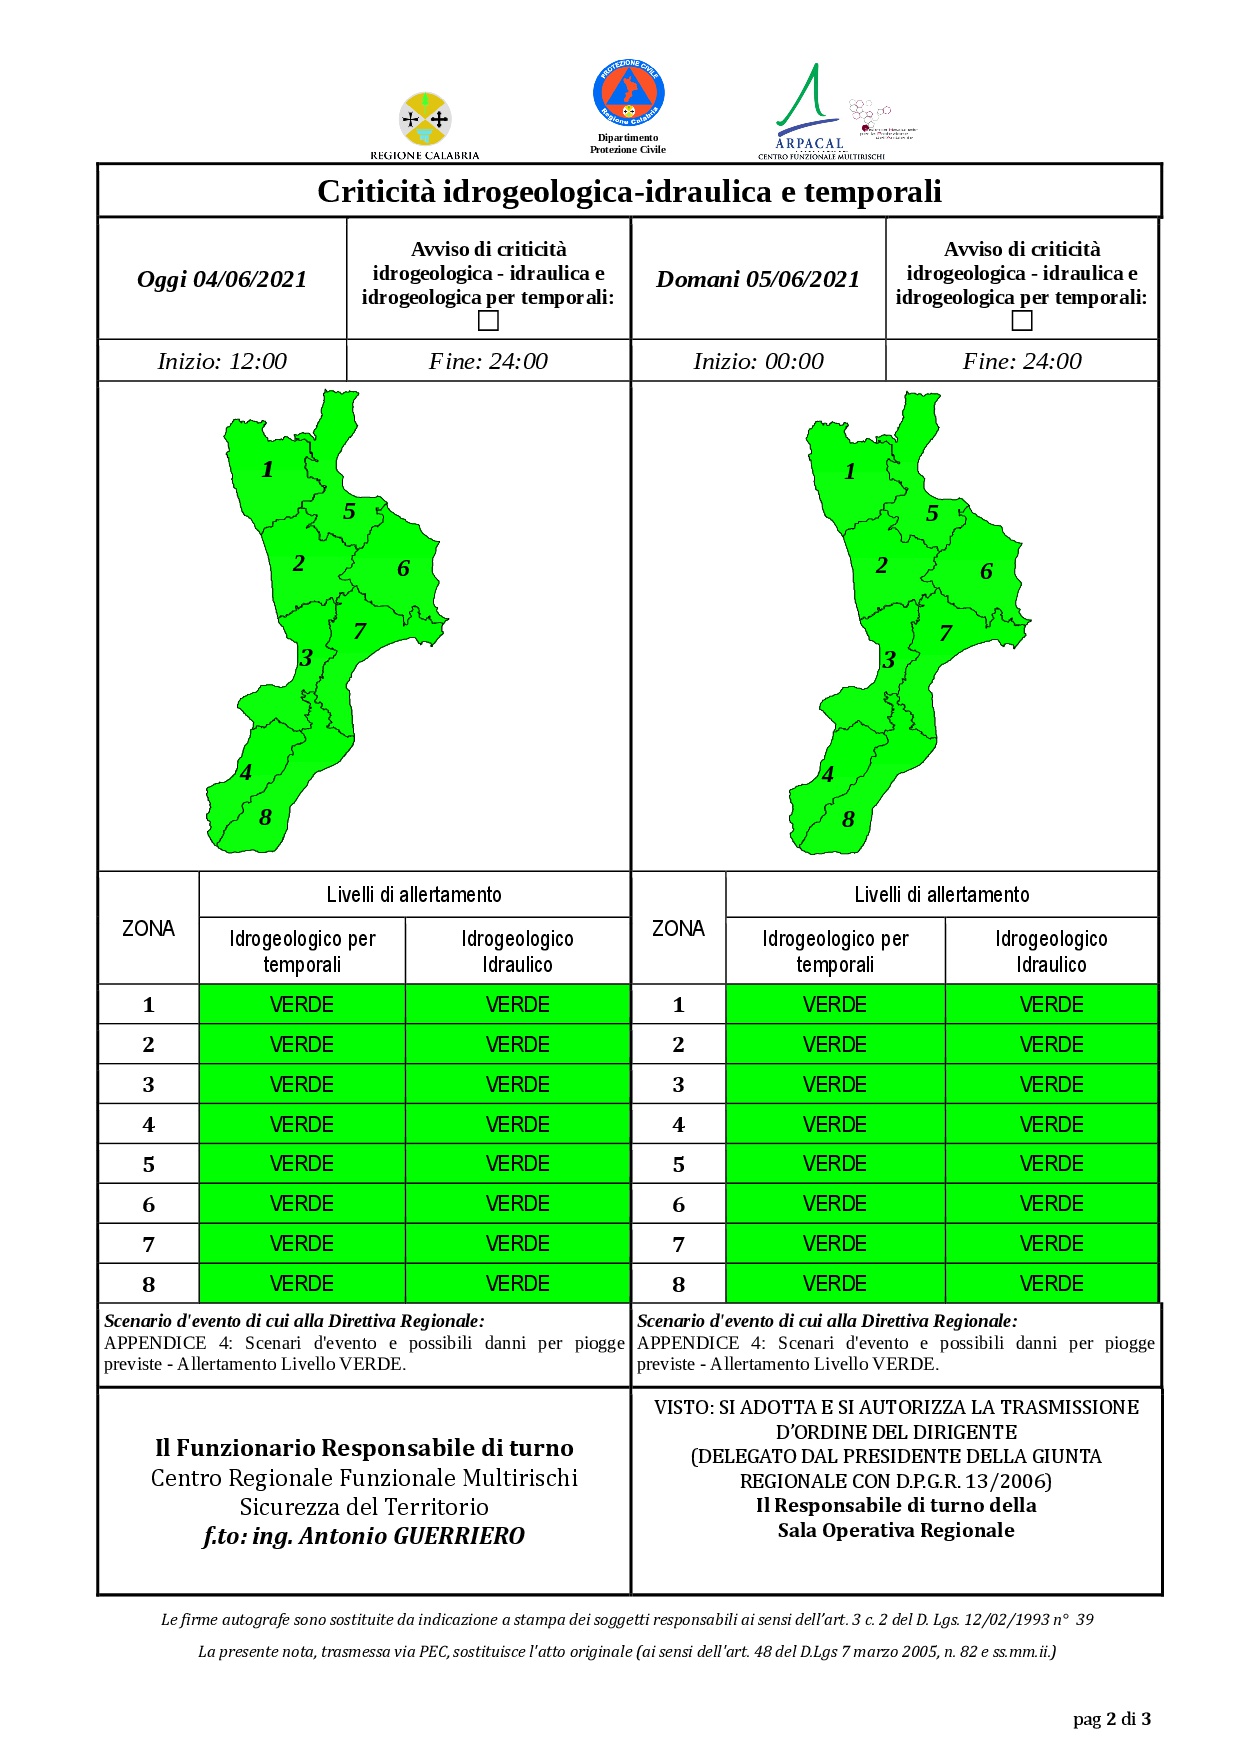 Criticità idrogeologica-idraulica e temporali in Calabria 04-06-2021